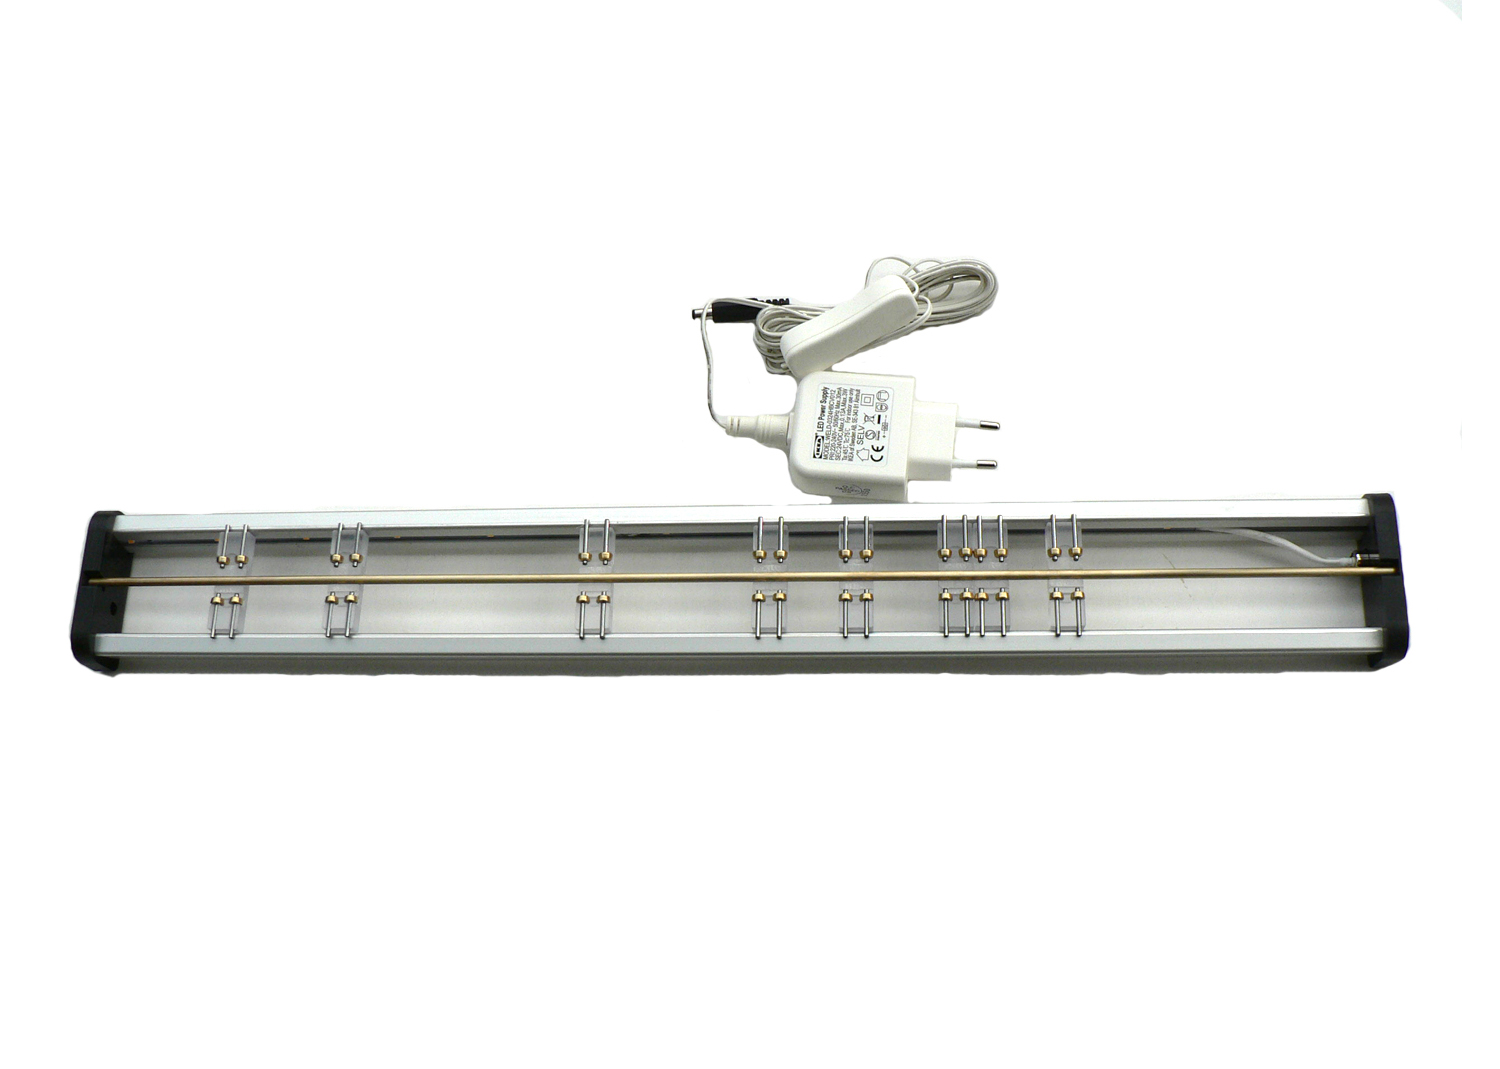 Spur N, KPF Rollenprüfstand 550 mm mit LED Beleuchtung 